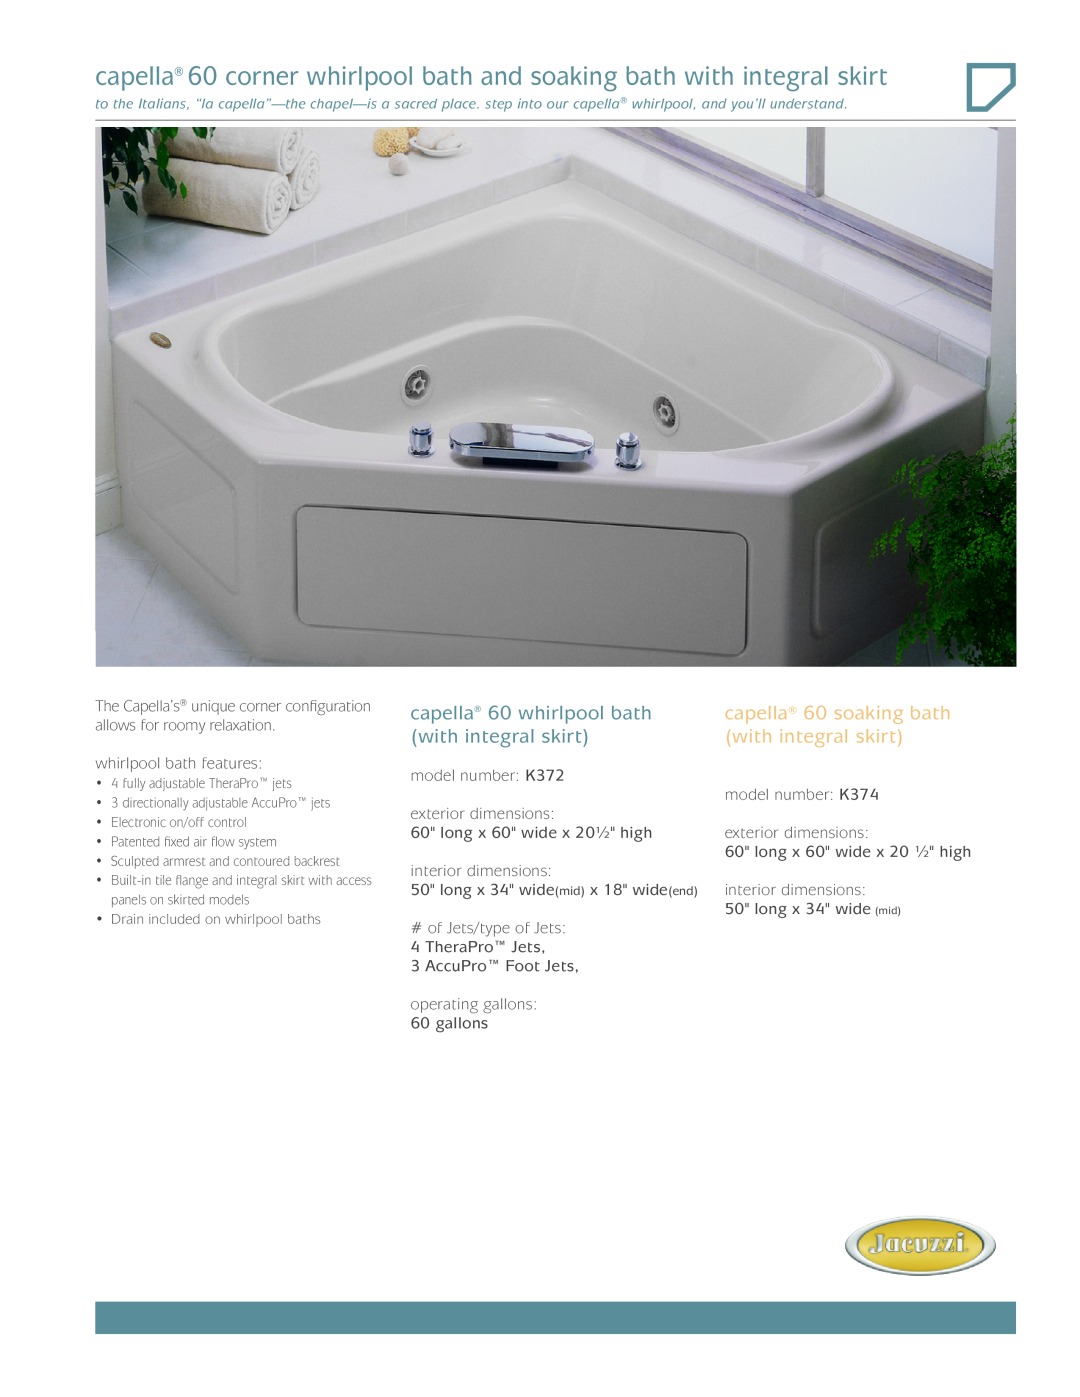 Jacuzzi K374, K372 dimensions capella 60 whirlpool bath, capella 60 soaking bath, with integral skirt 